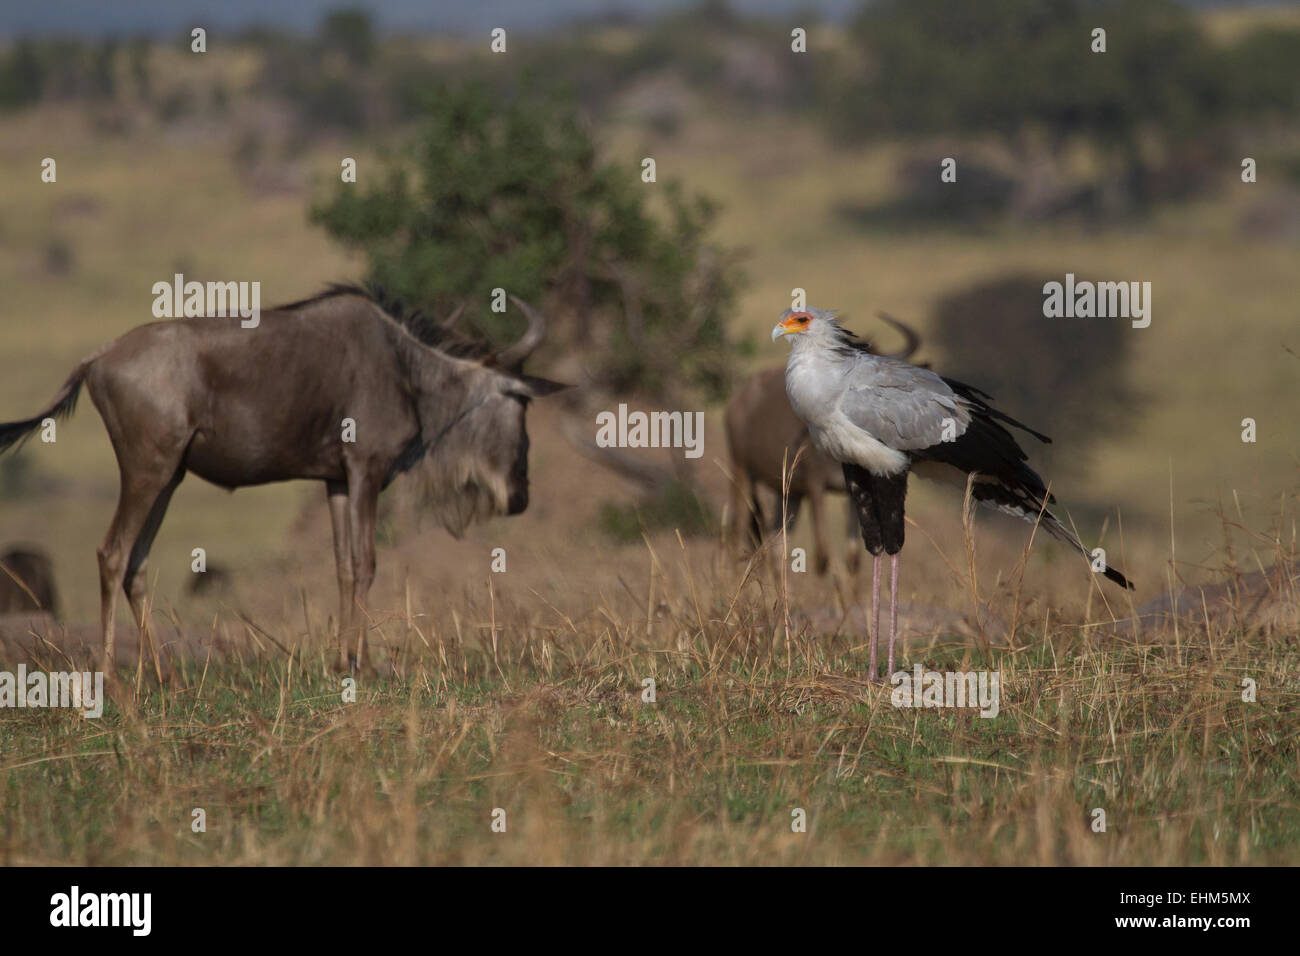 Secretary bird (Sagittarius serpentarius) standing next to a Wildebeest in the Serengeti. Stock Photo